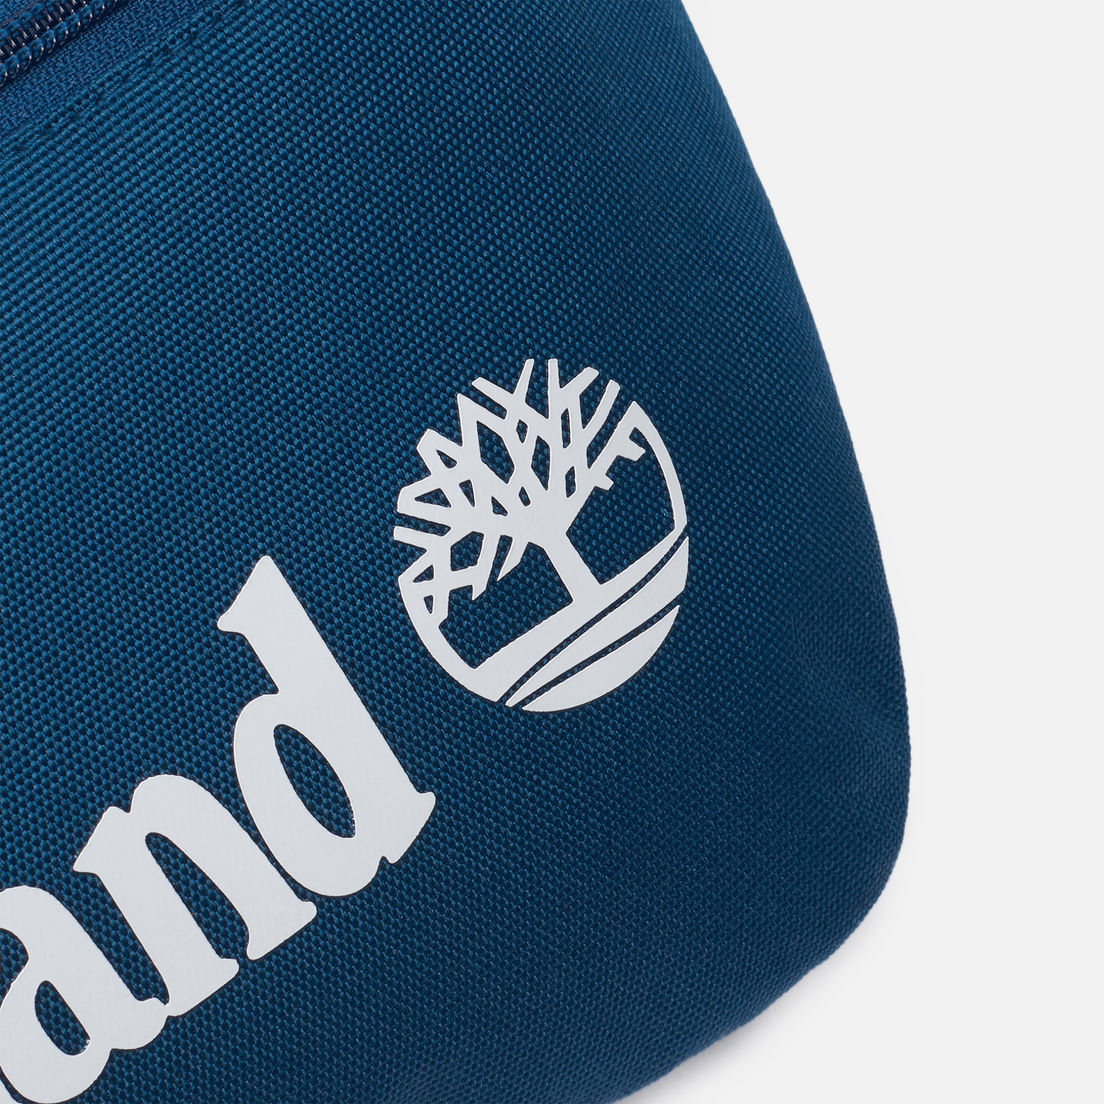 Timberland Сумка на пояс Logo Sling